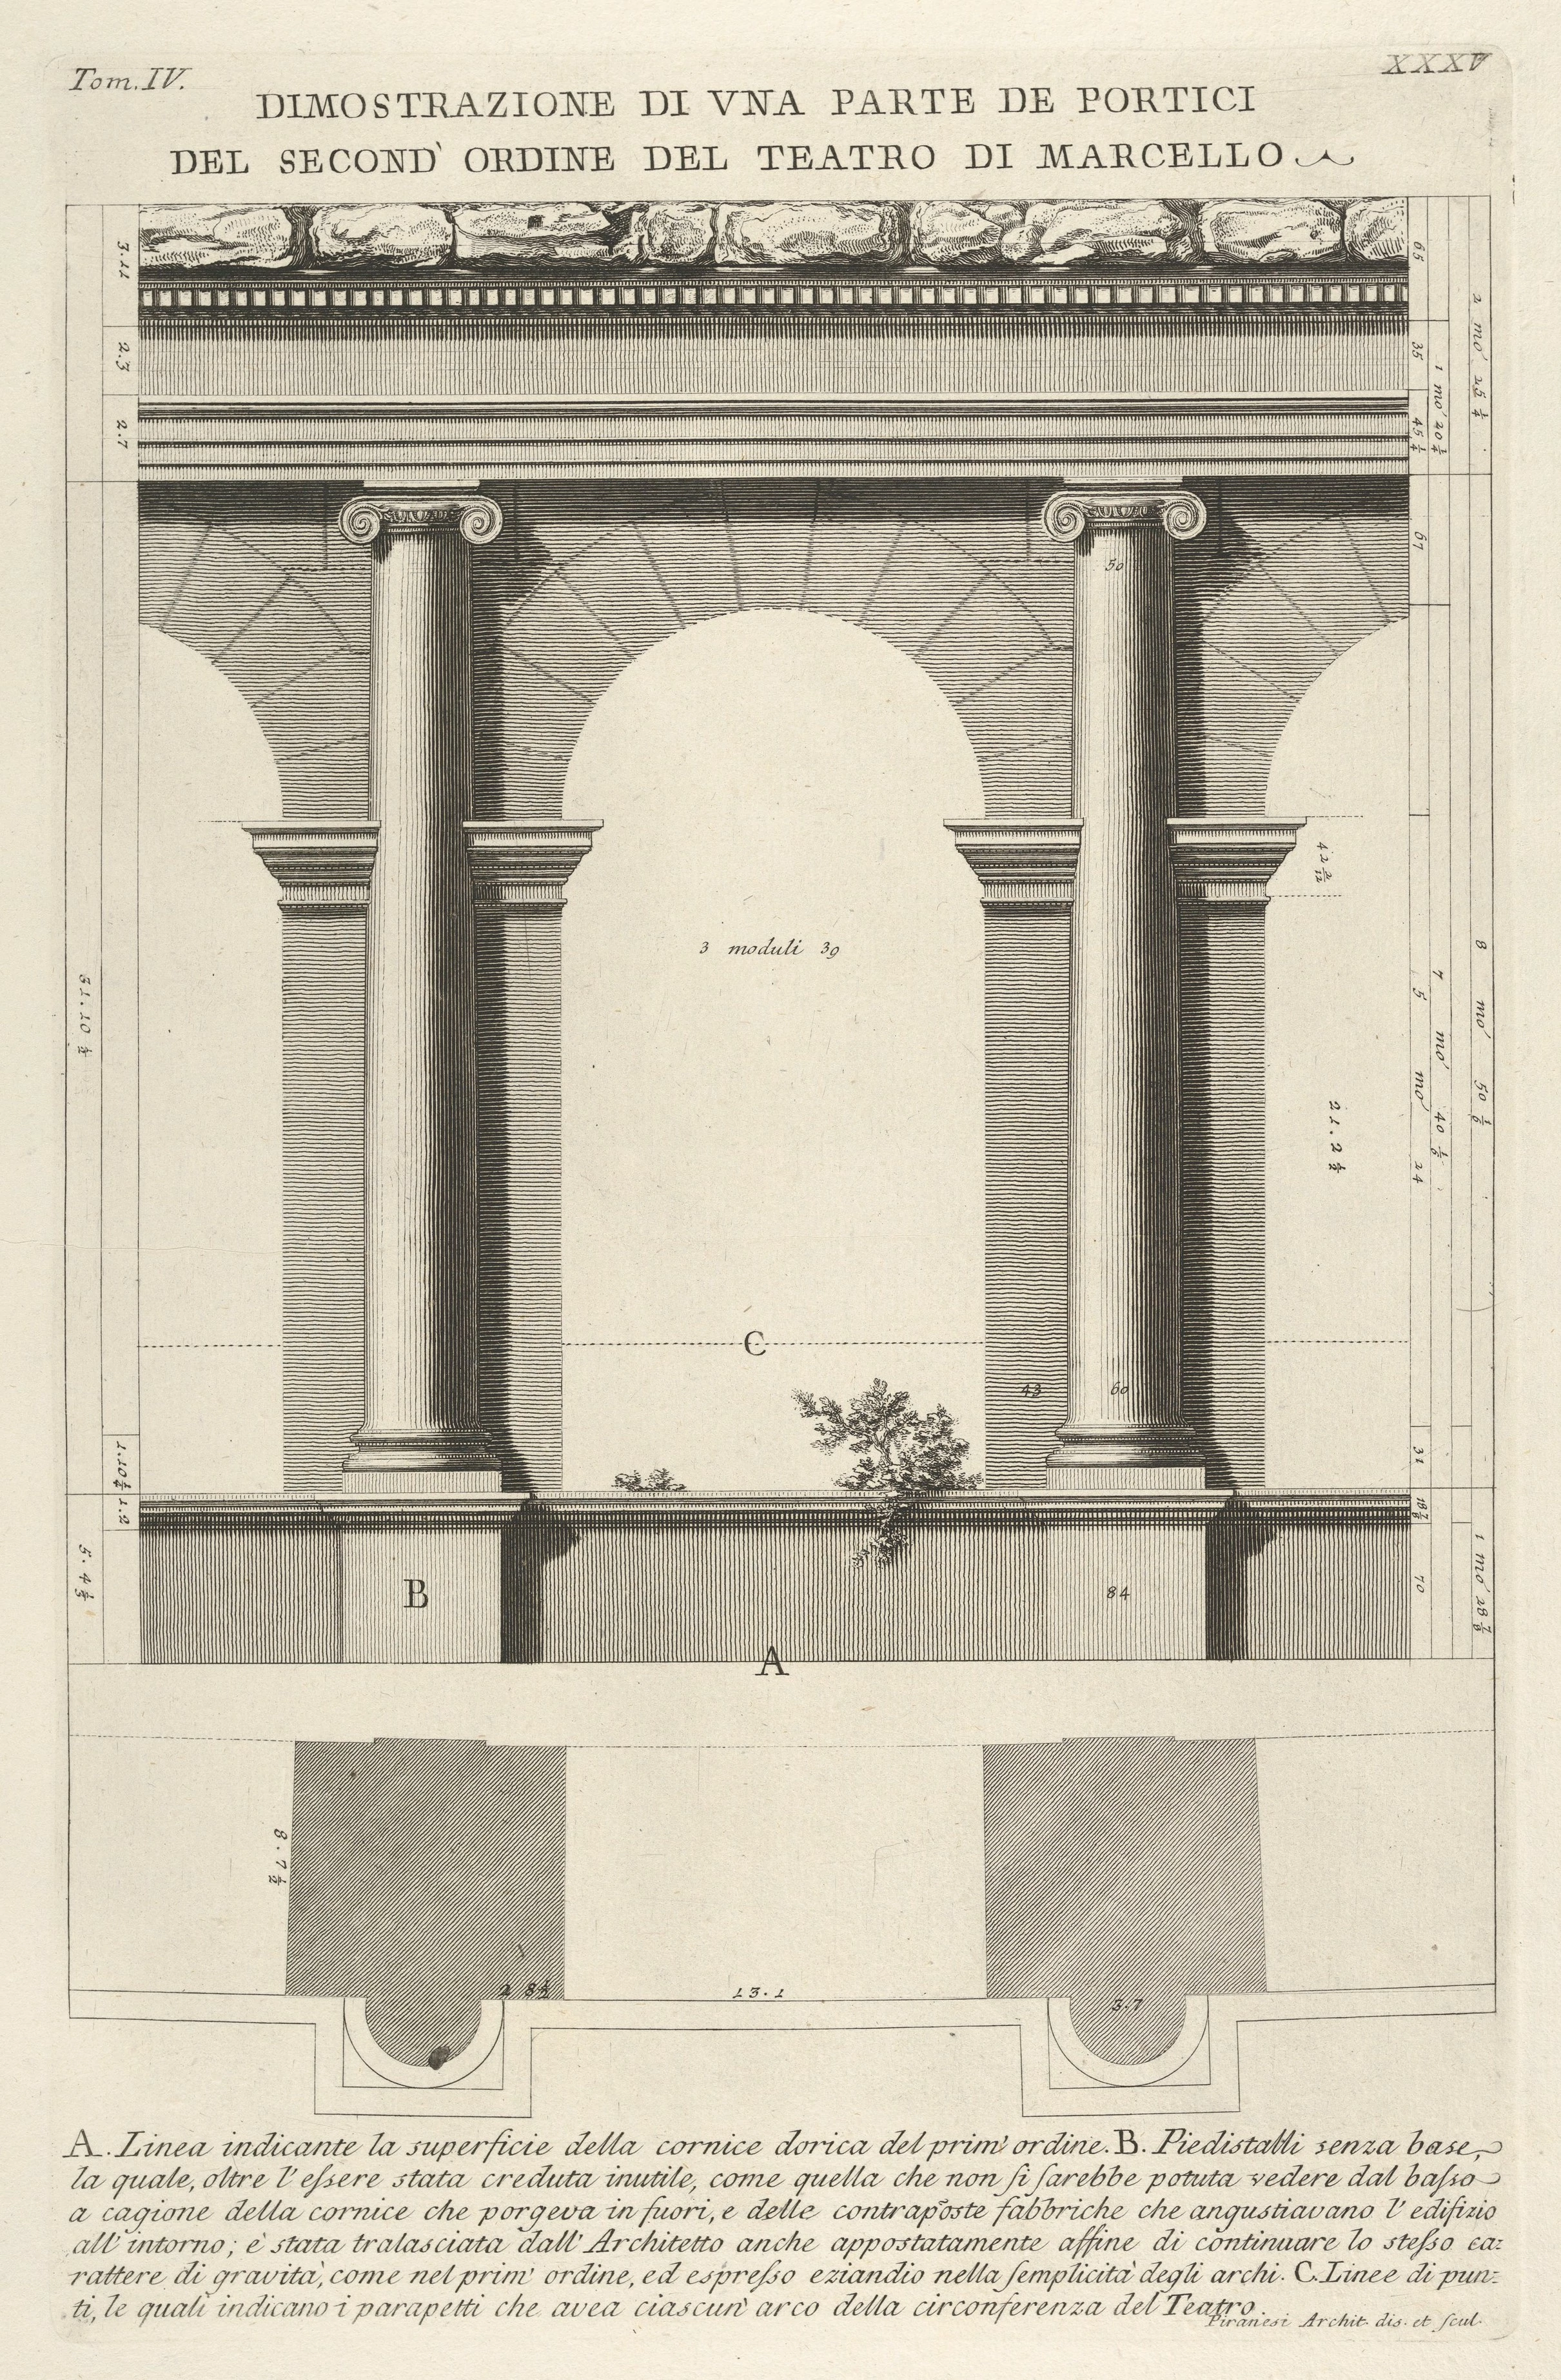 Elevation and Plan of Theater of Marcellus, Giovanni Battista Piranesi